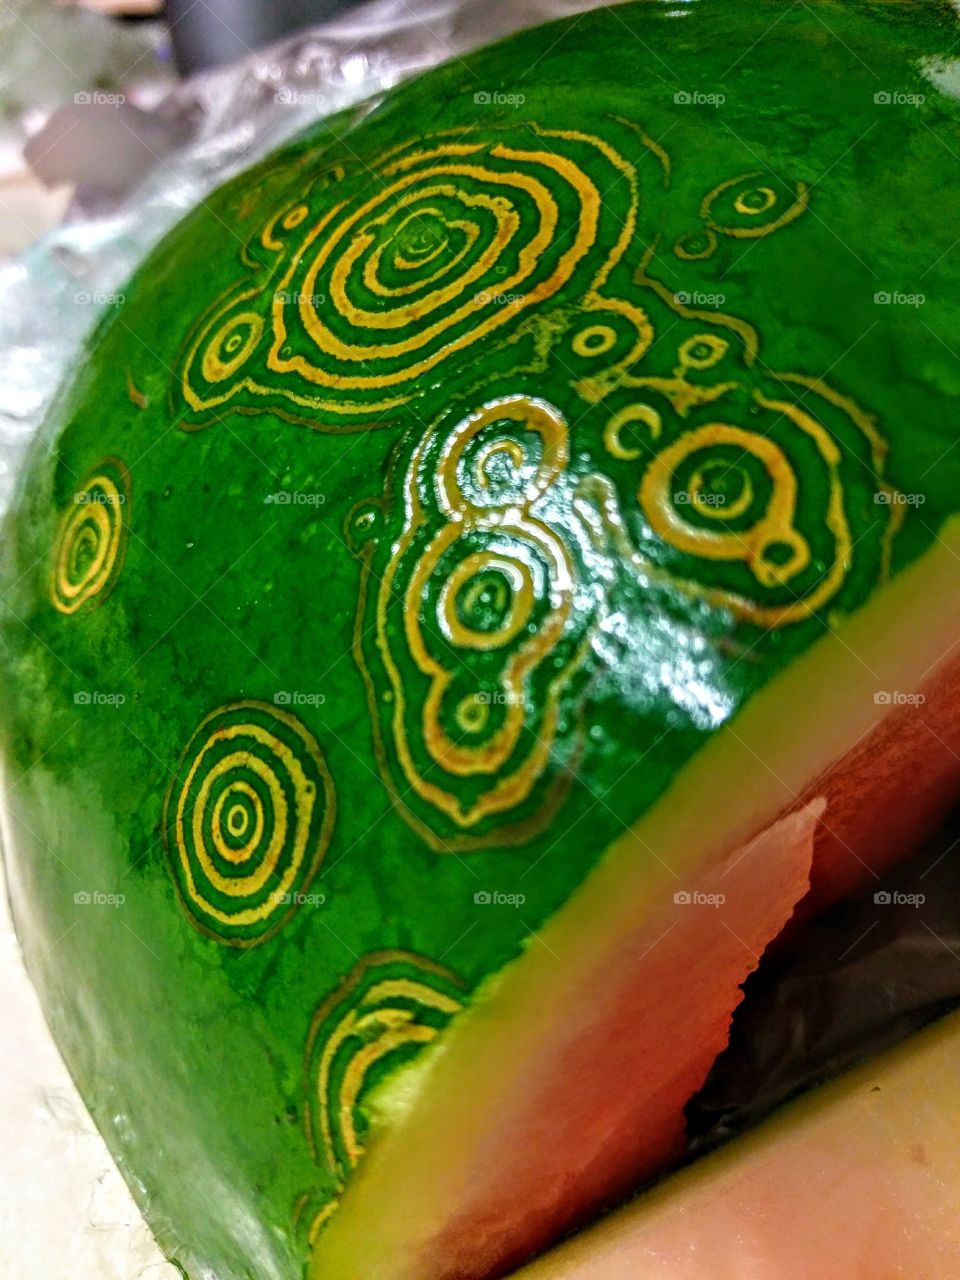 Weird patterns on Watermelon